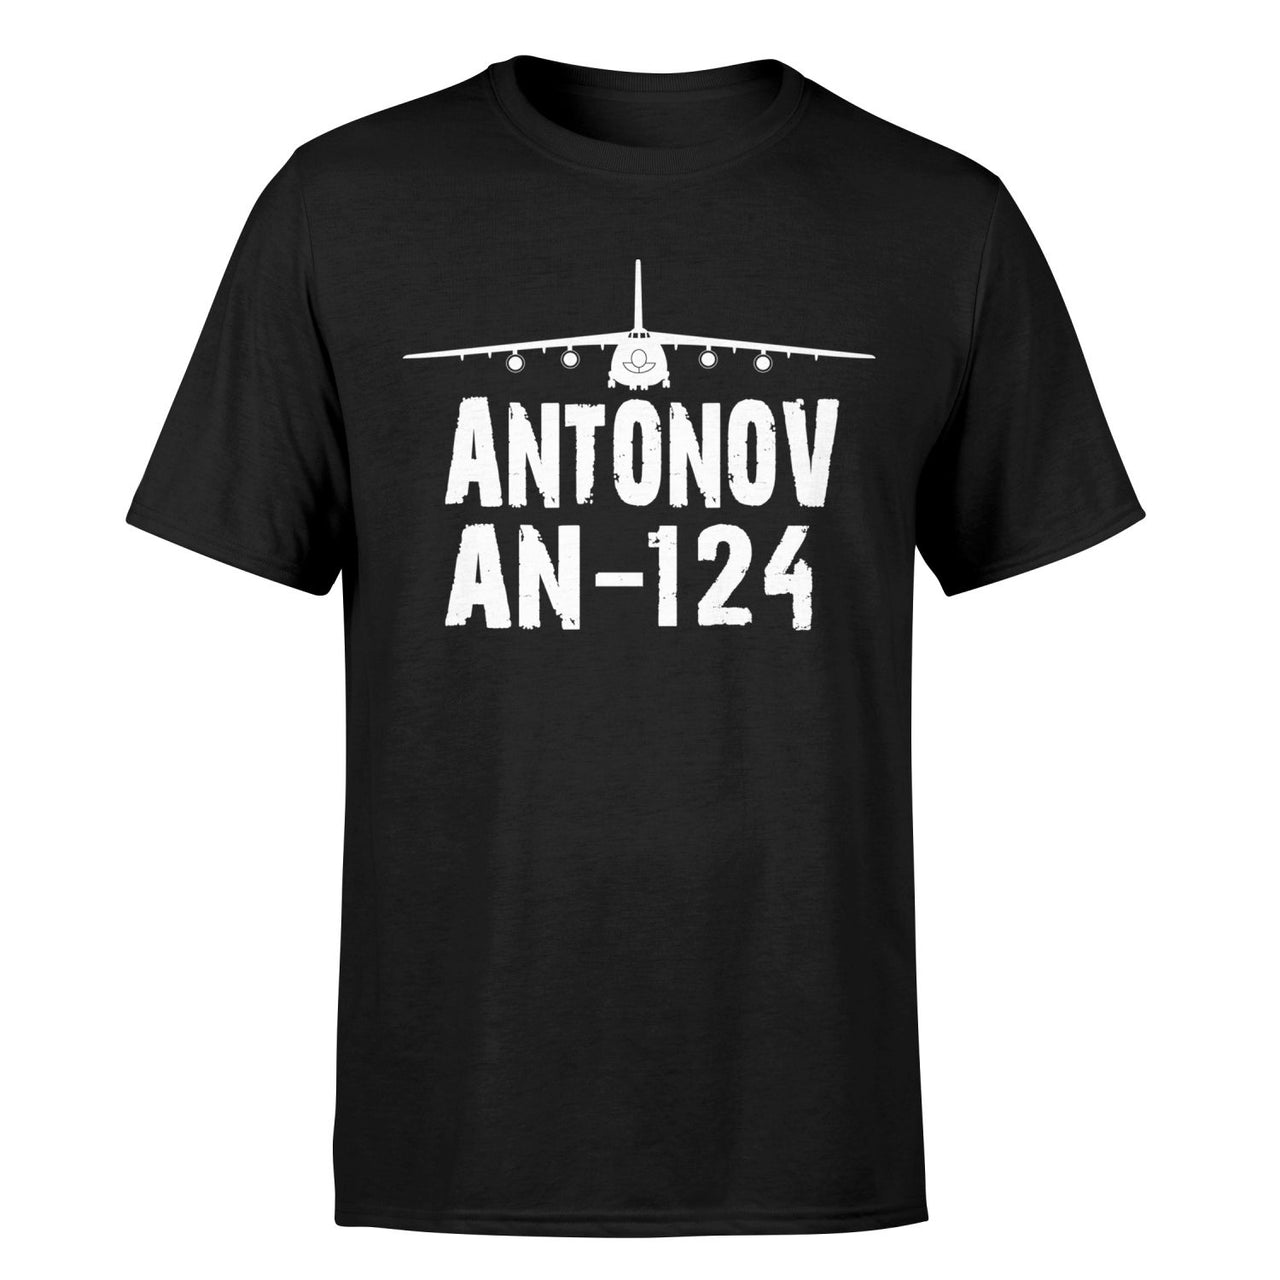 Antonov AN-124 & Plane Designed T-Shirts